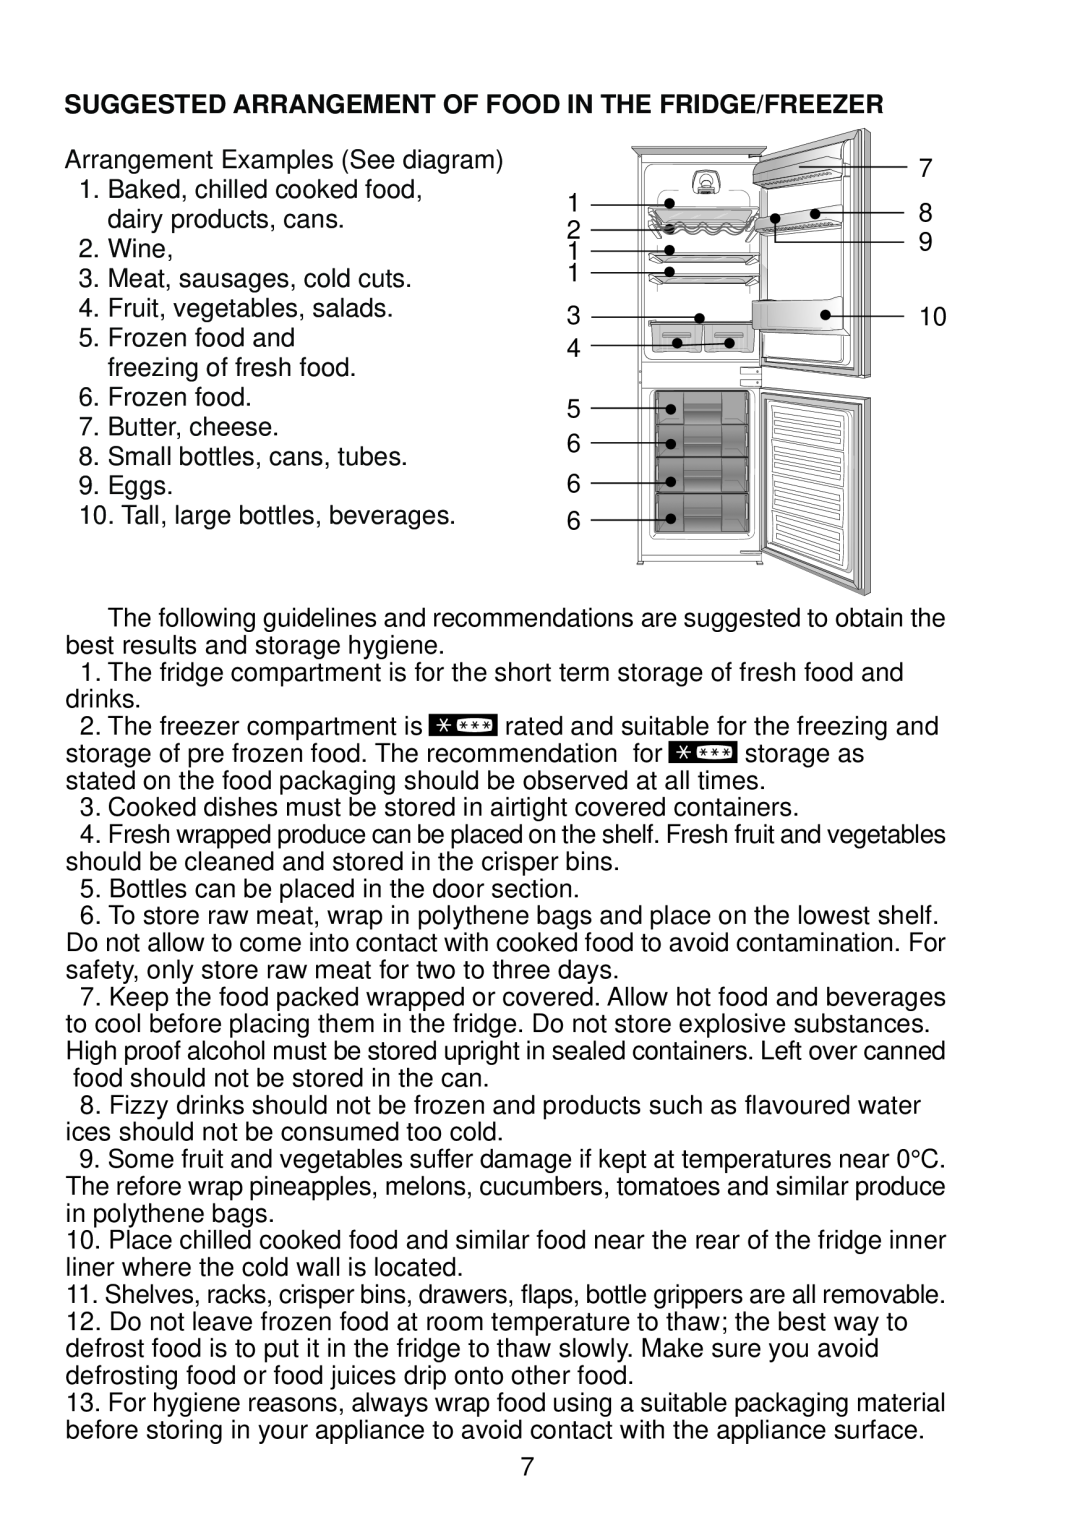 Glen Dimplex Home Appliances Ltd IFF5050 manual Suggested Arrangement Of Food In The Fridge/Freezer 